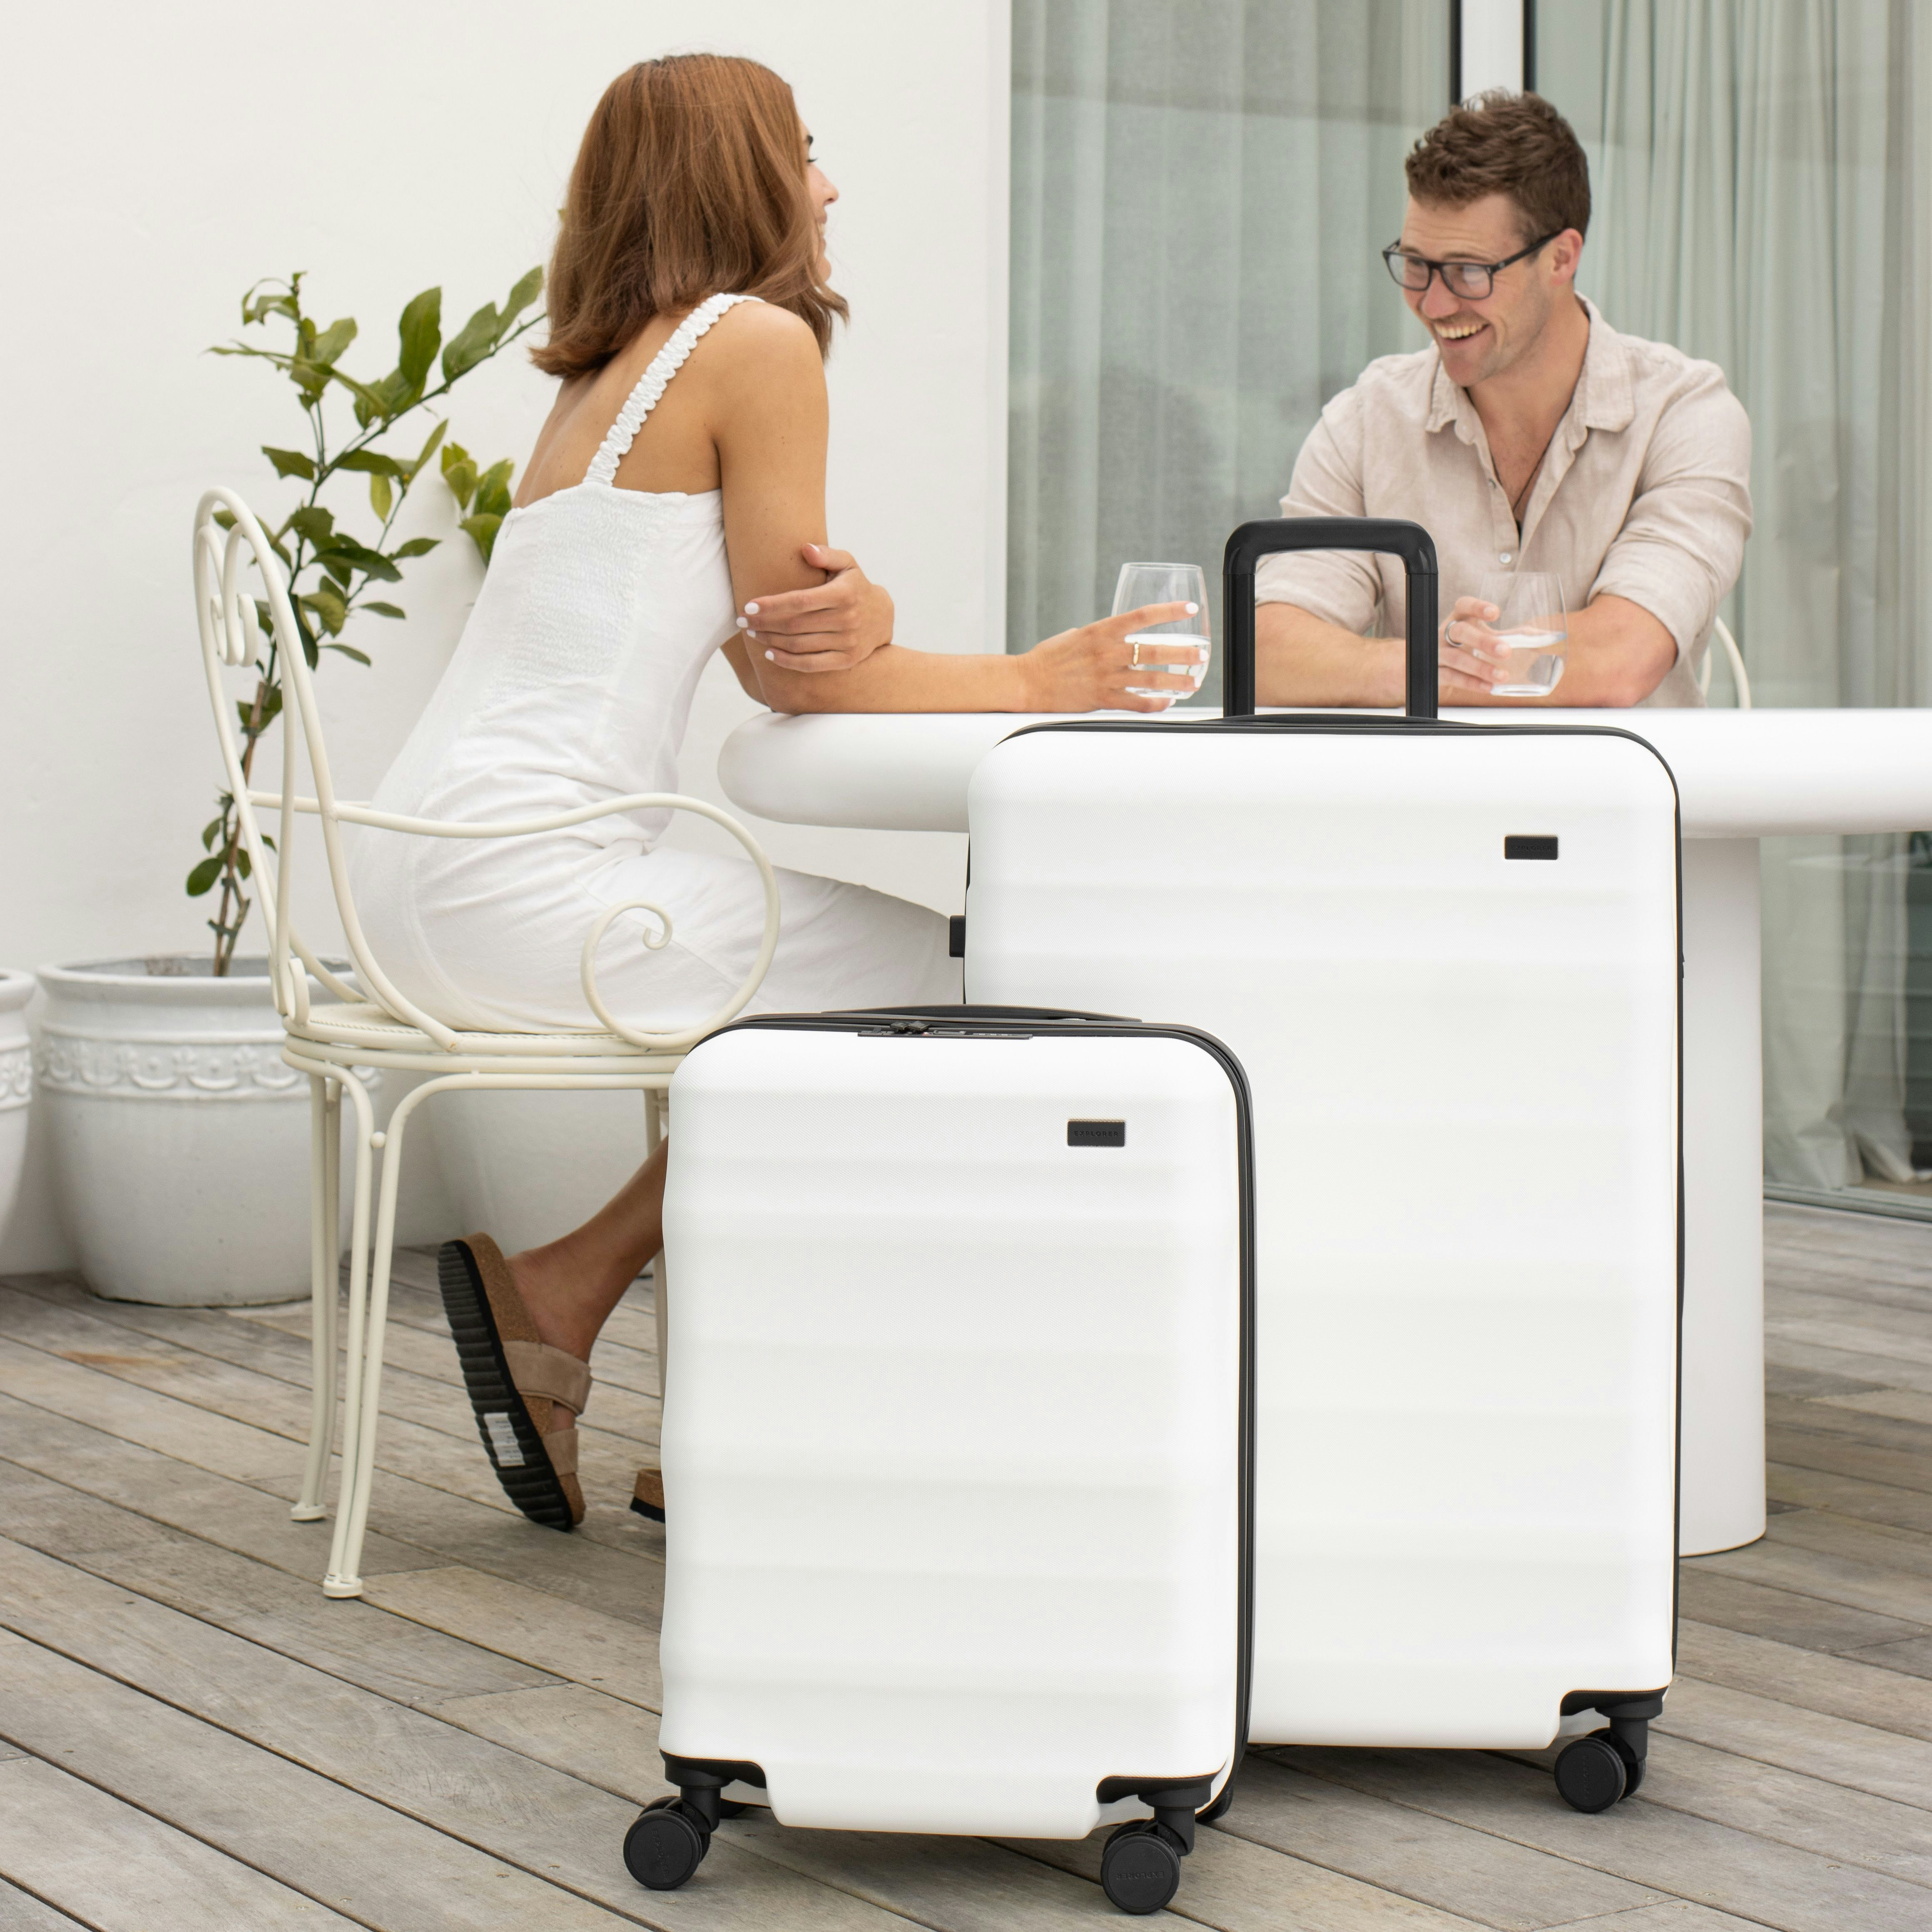 White Explorer Luna-Air Luggage Set on a deck enjoying conversation